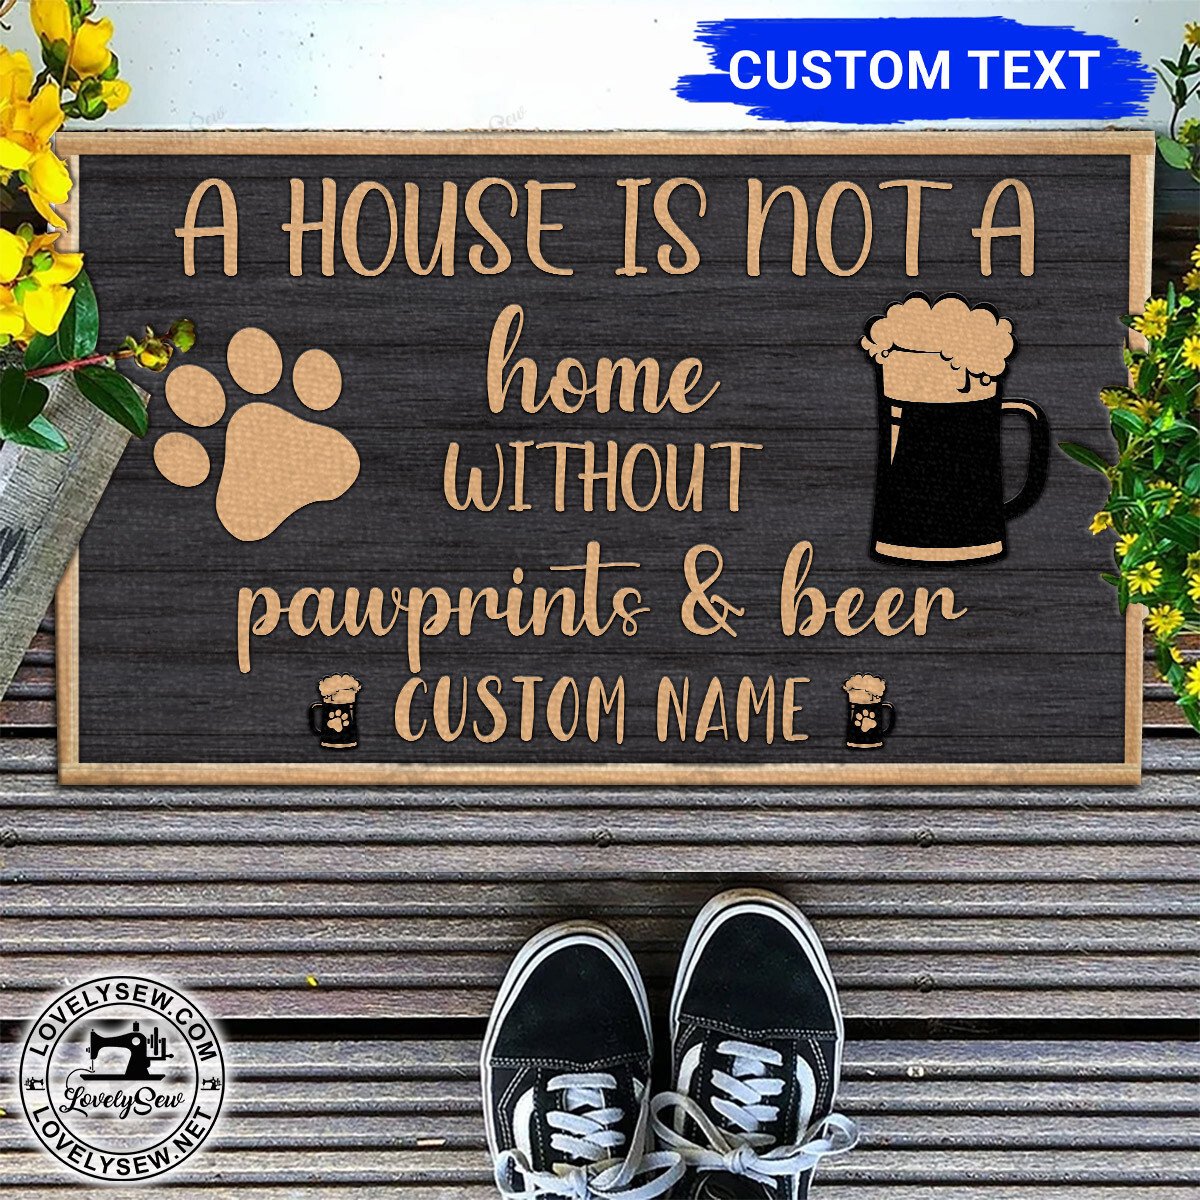 Custom Name Pawprints and Beer Brown and Black Doormat